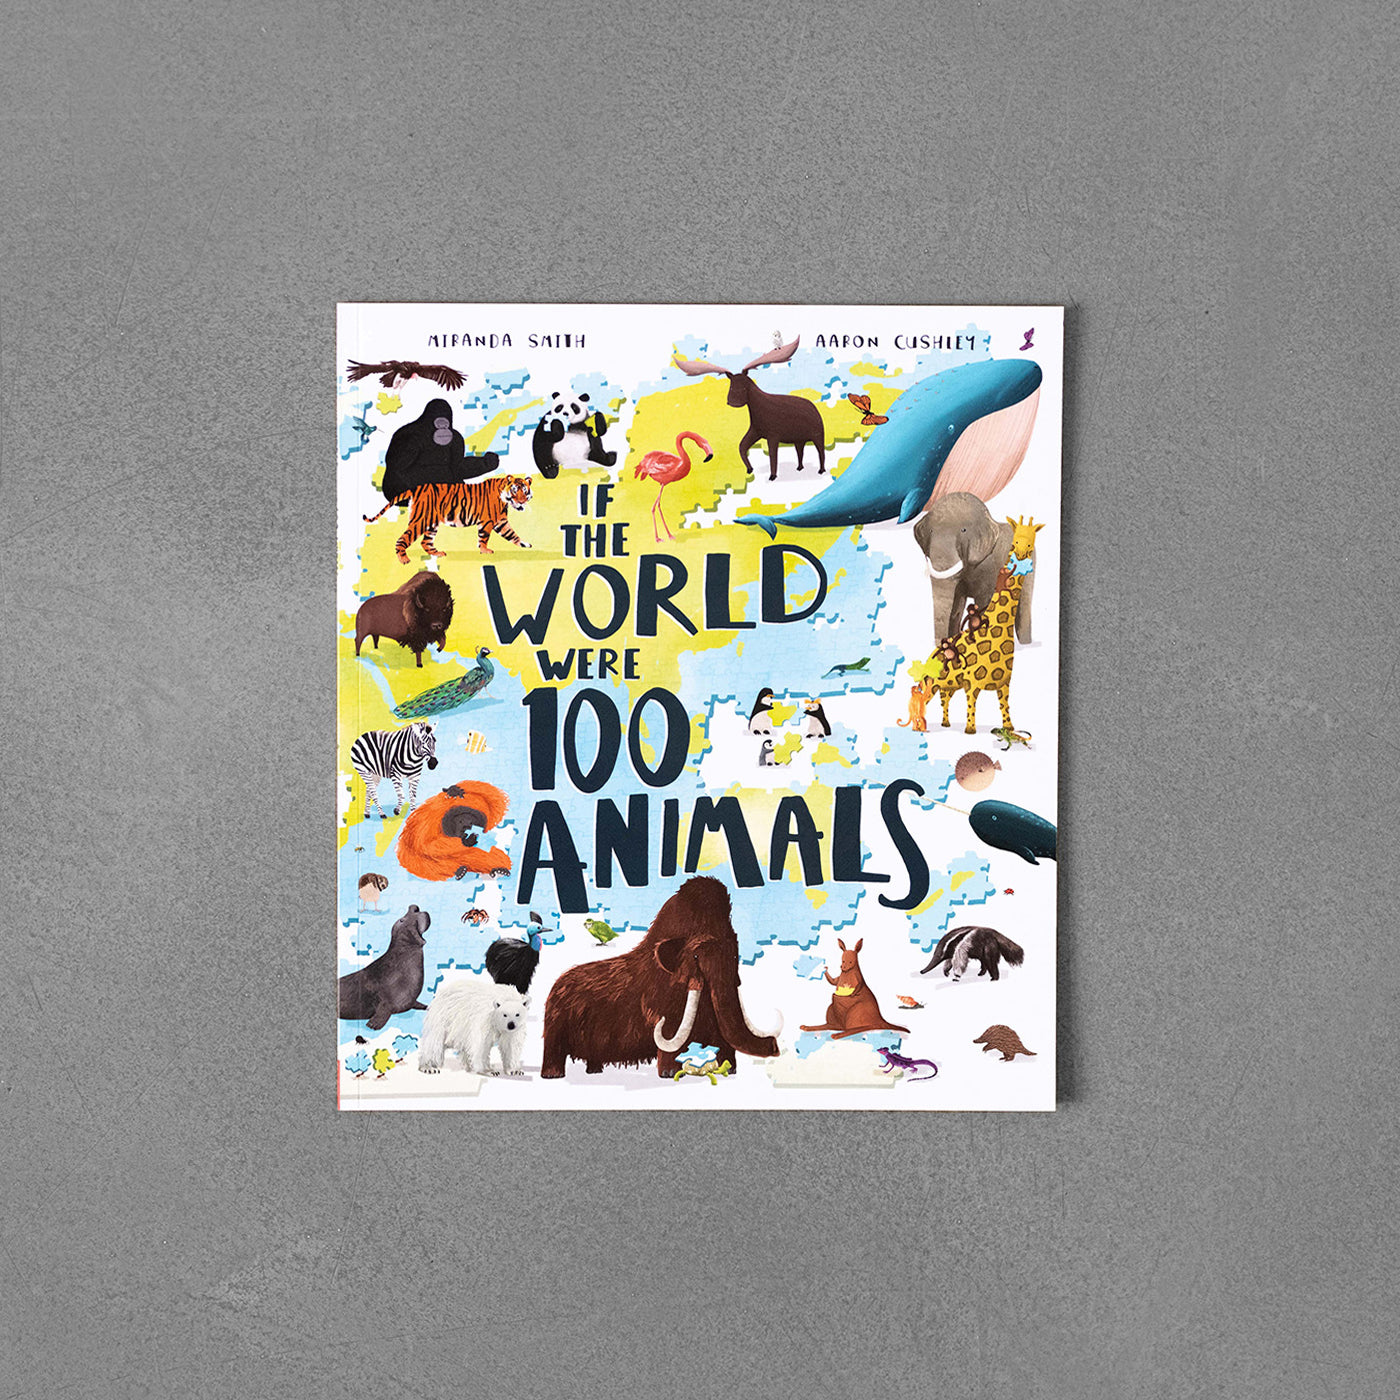 If the World Were 100 Animals – Miranda Smith, Il. Aaron Cushley